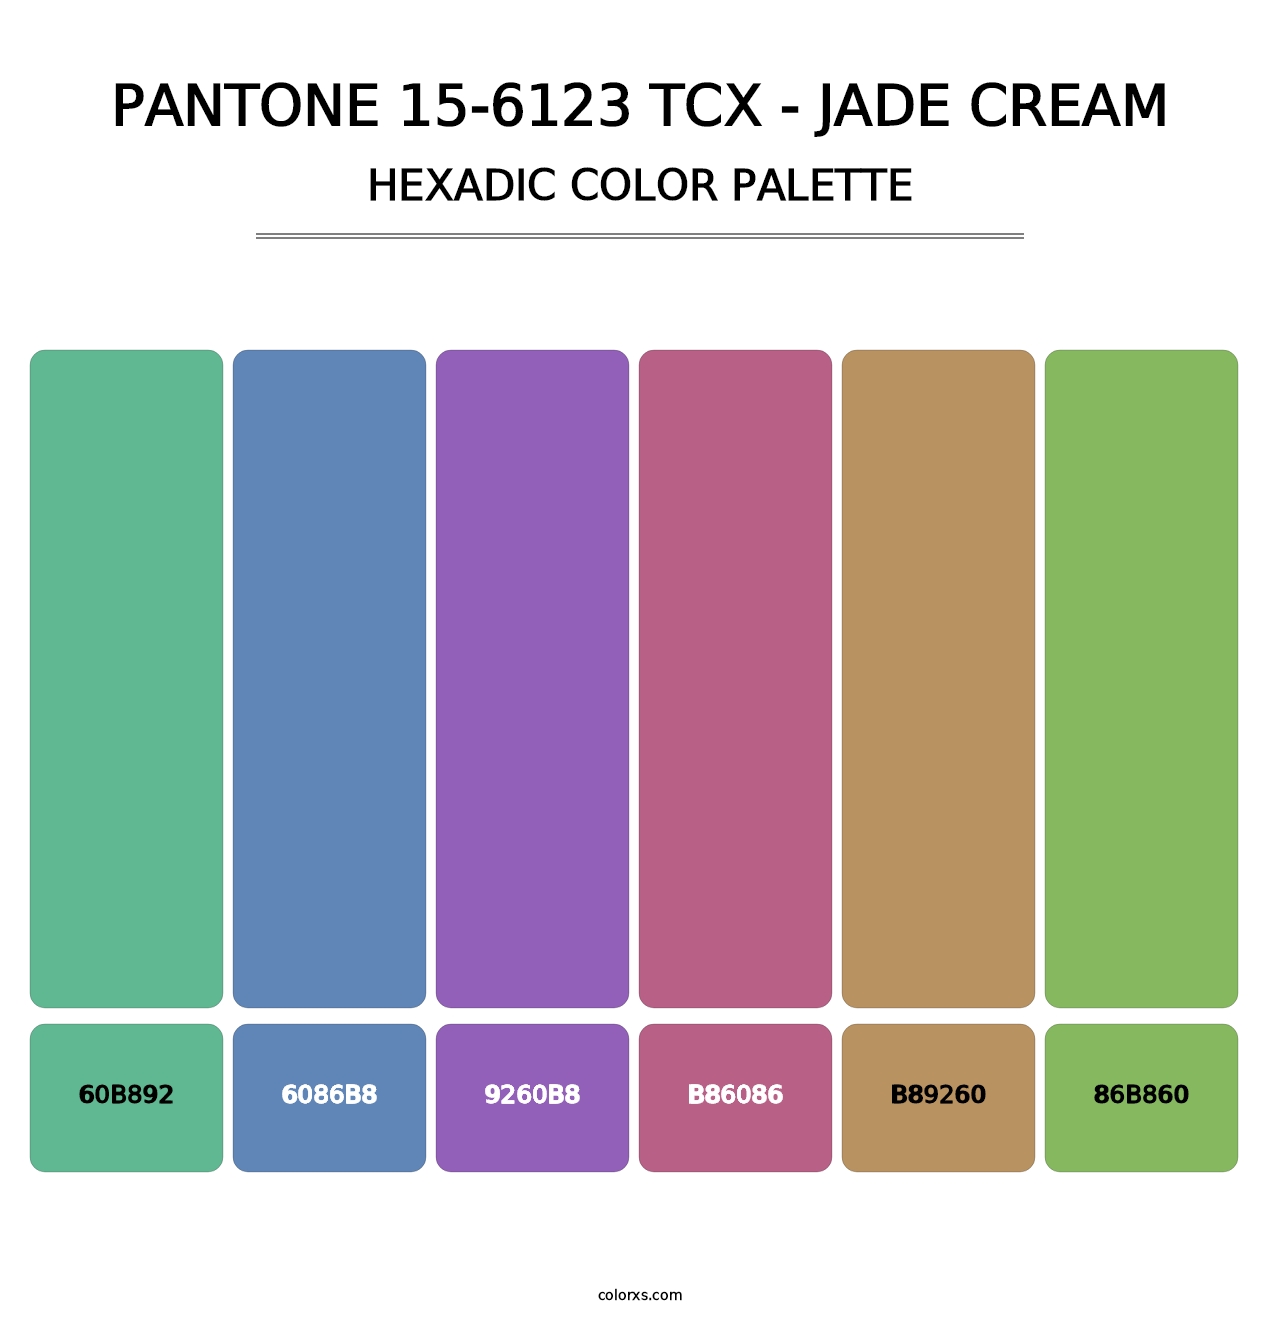 PANTONE 15-6123 TCX - Jade Cream - Hexadic Color Palette